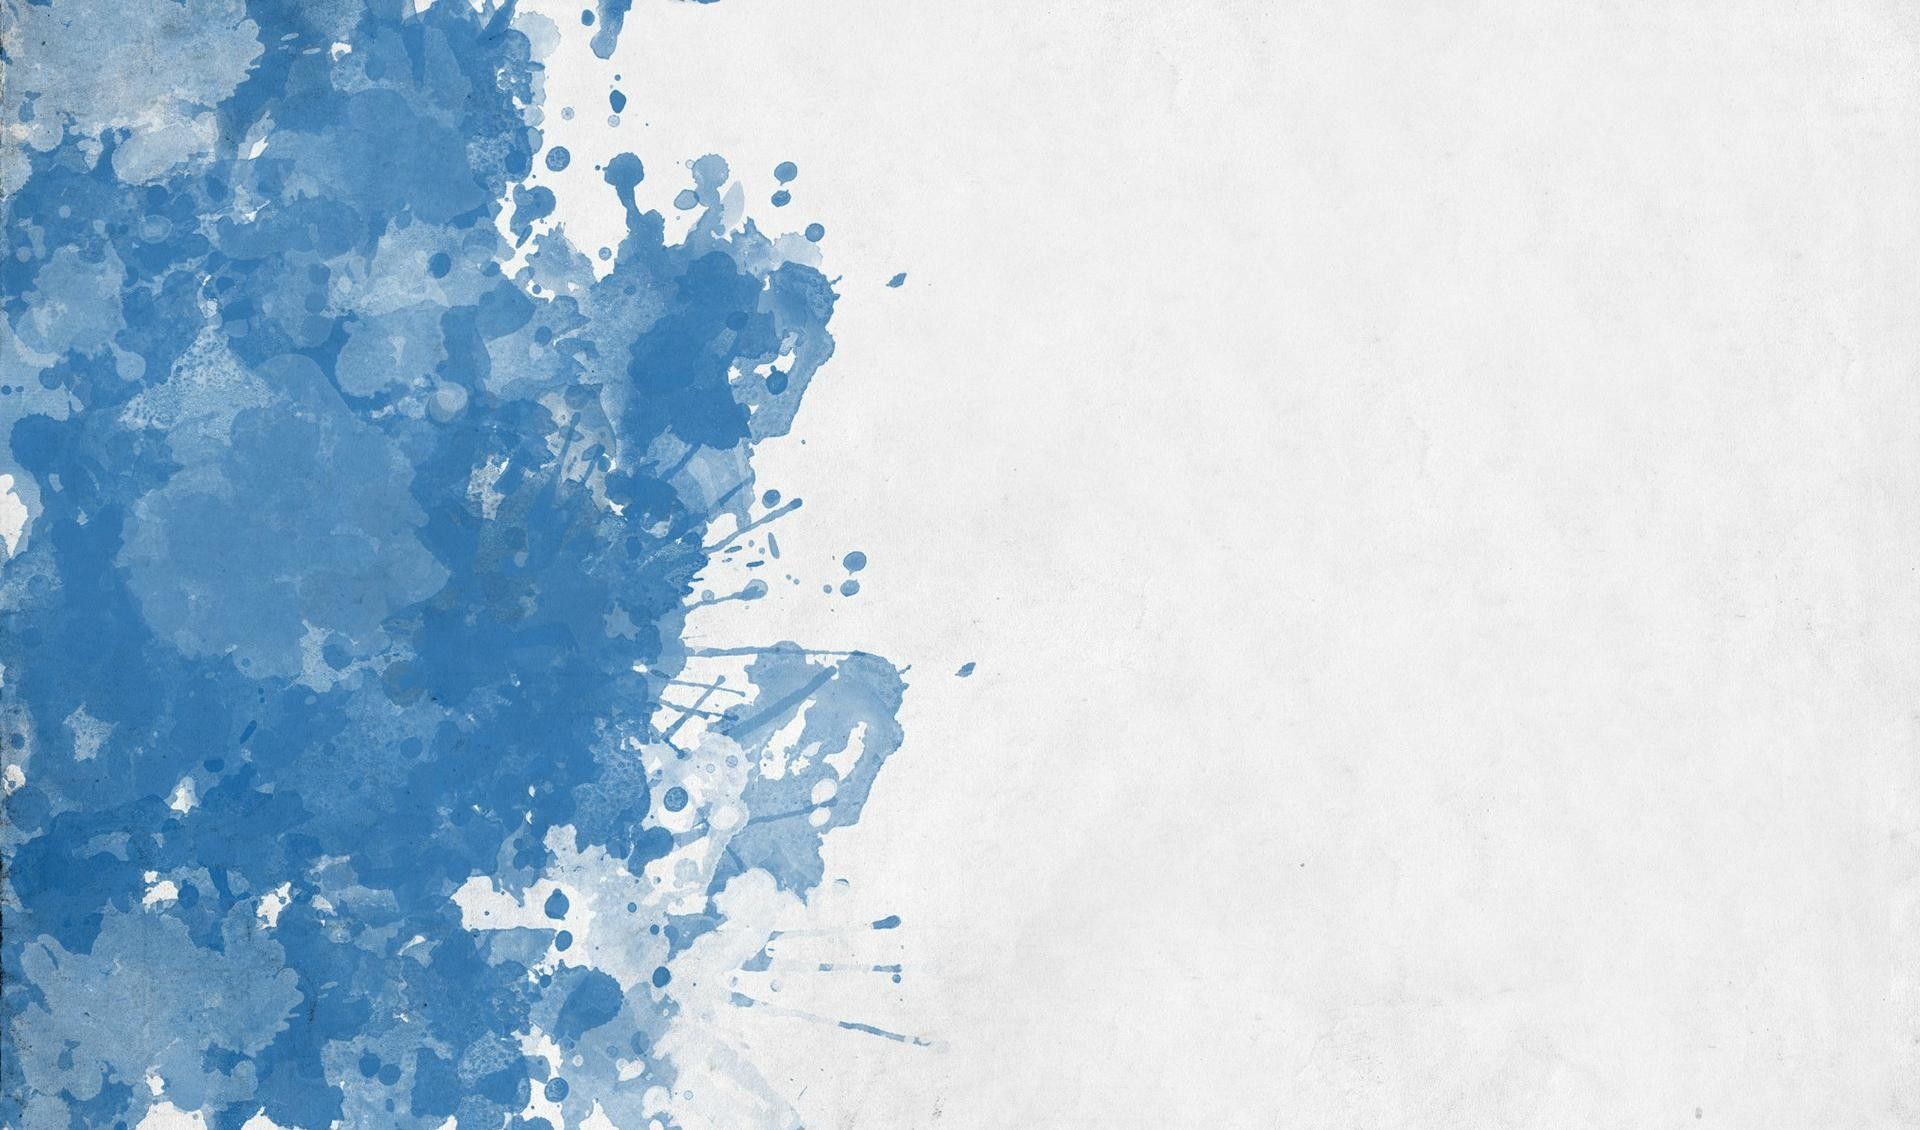 blue splatter paint backgrounds